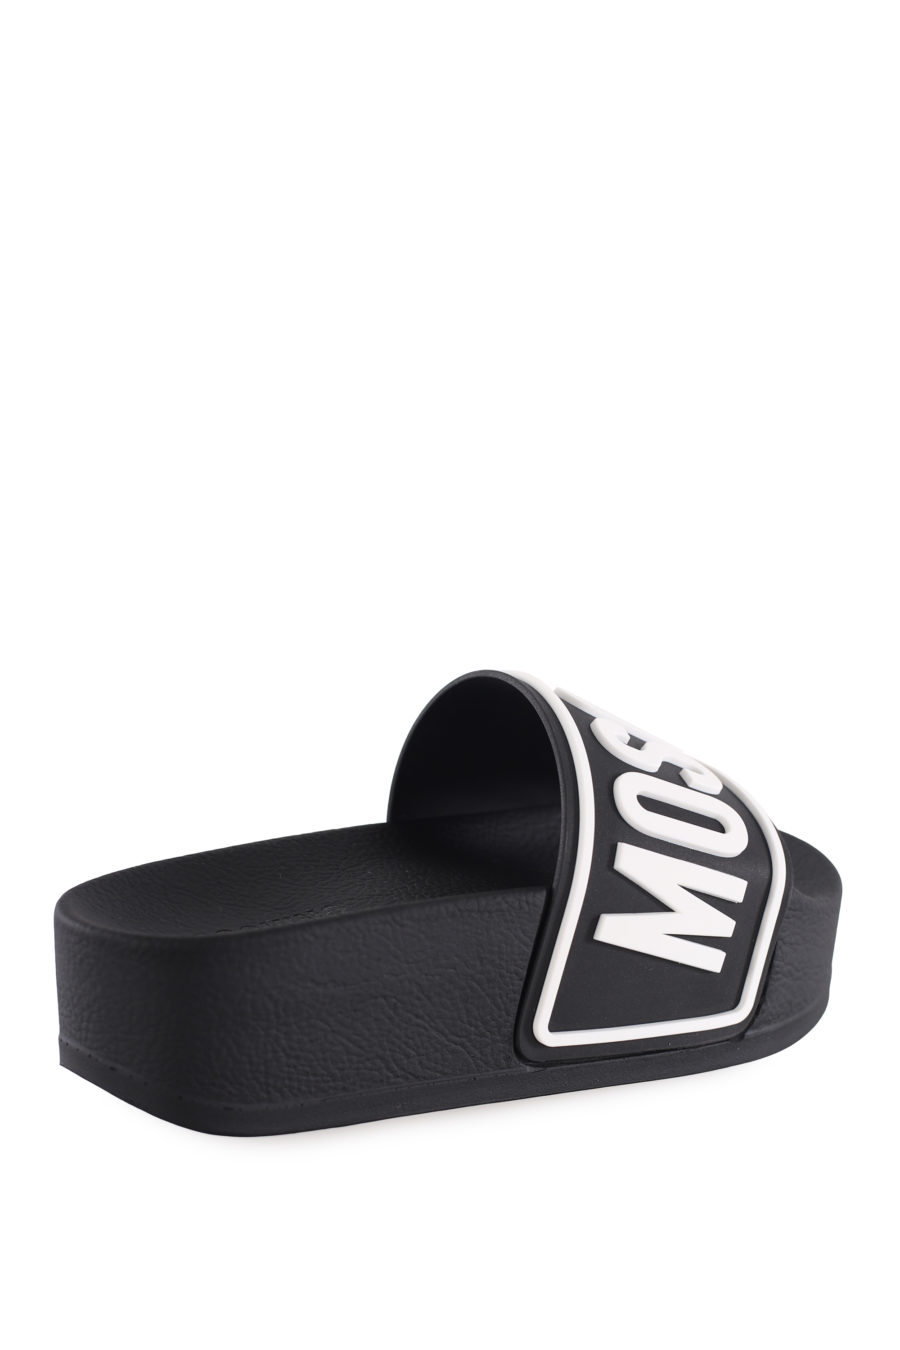 Black flip flops with white logo - IMG 7341